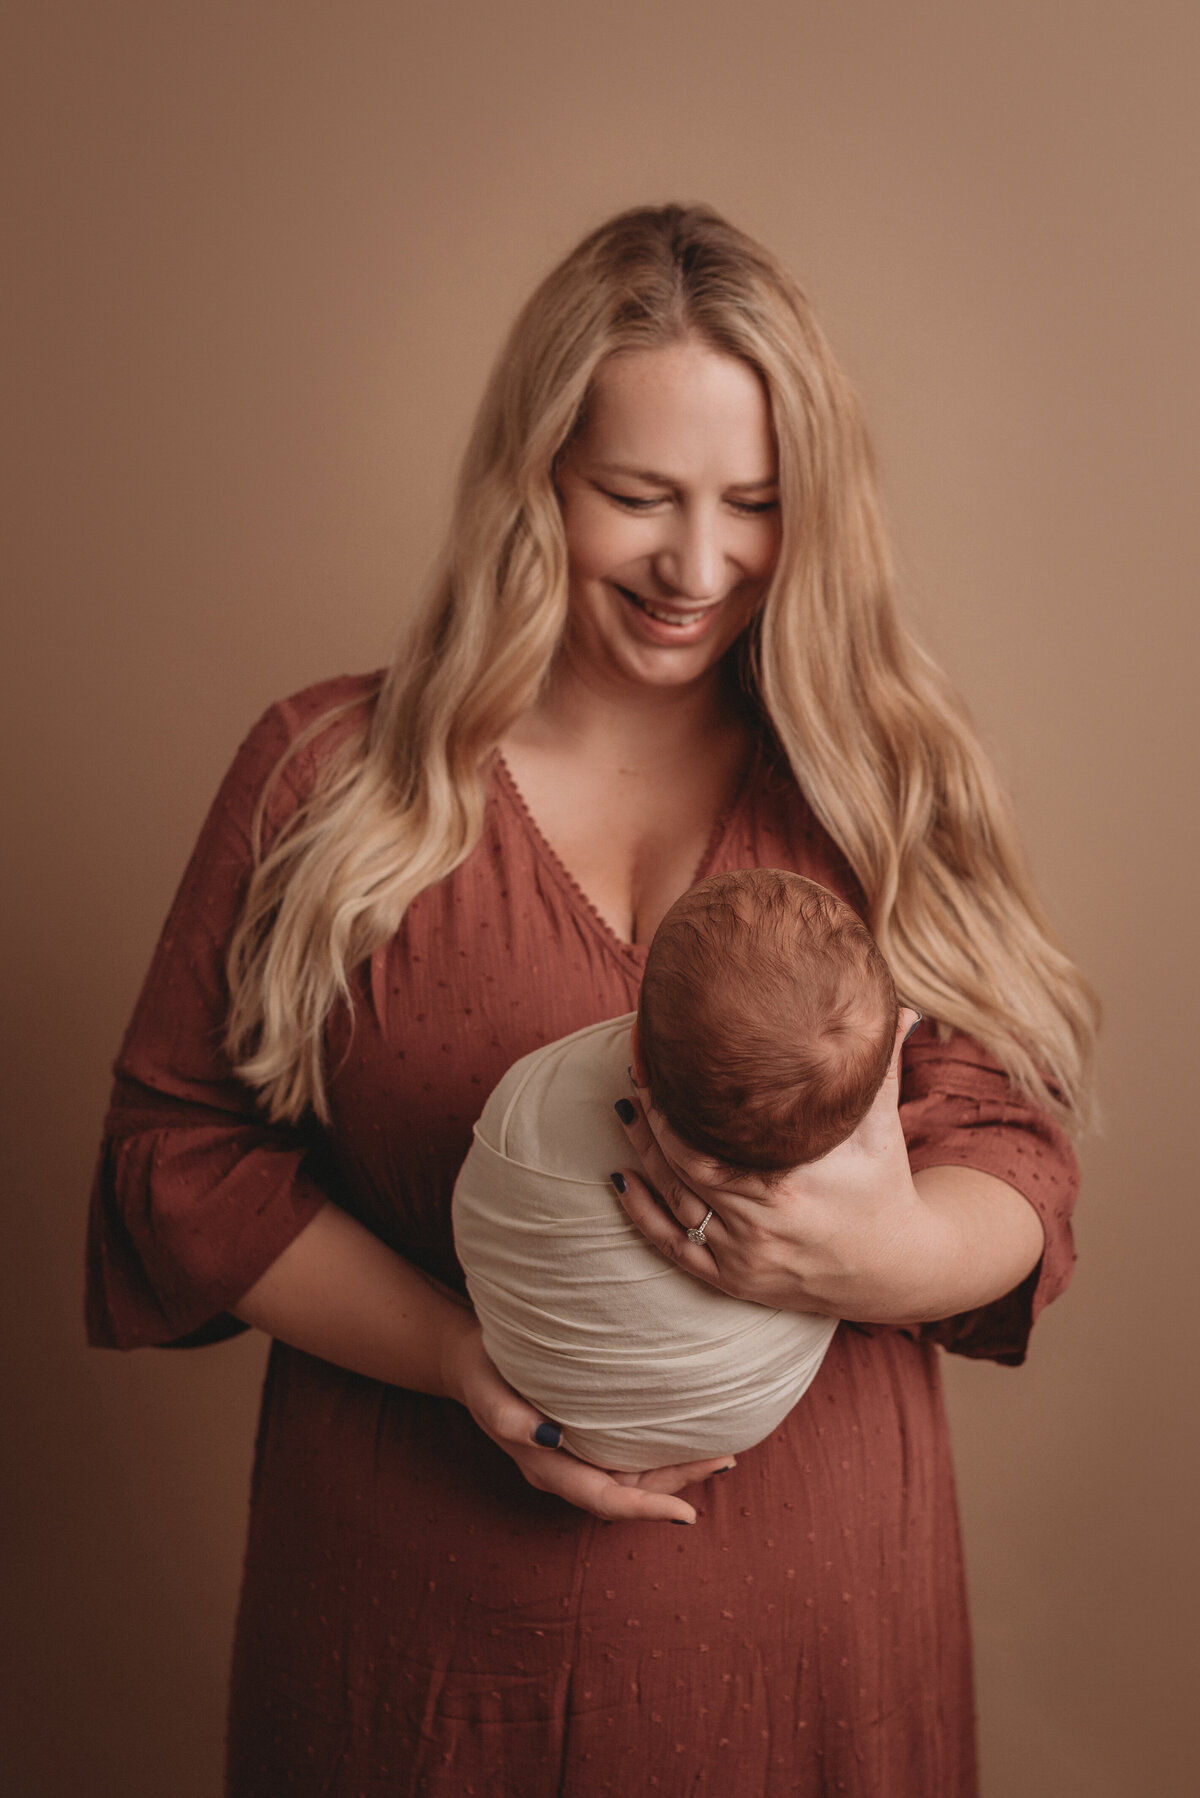 Atlanta, GA maternity and newborn photographer. Atlanta newborn photographer. Marietta GA maternity and newborn photographer